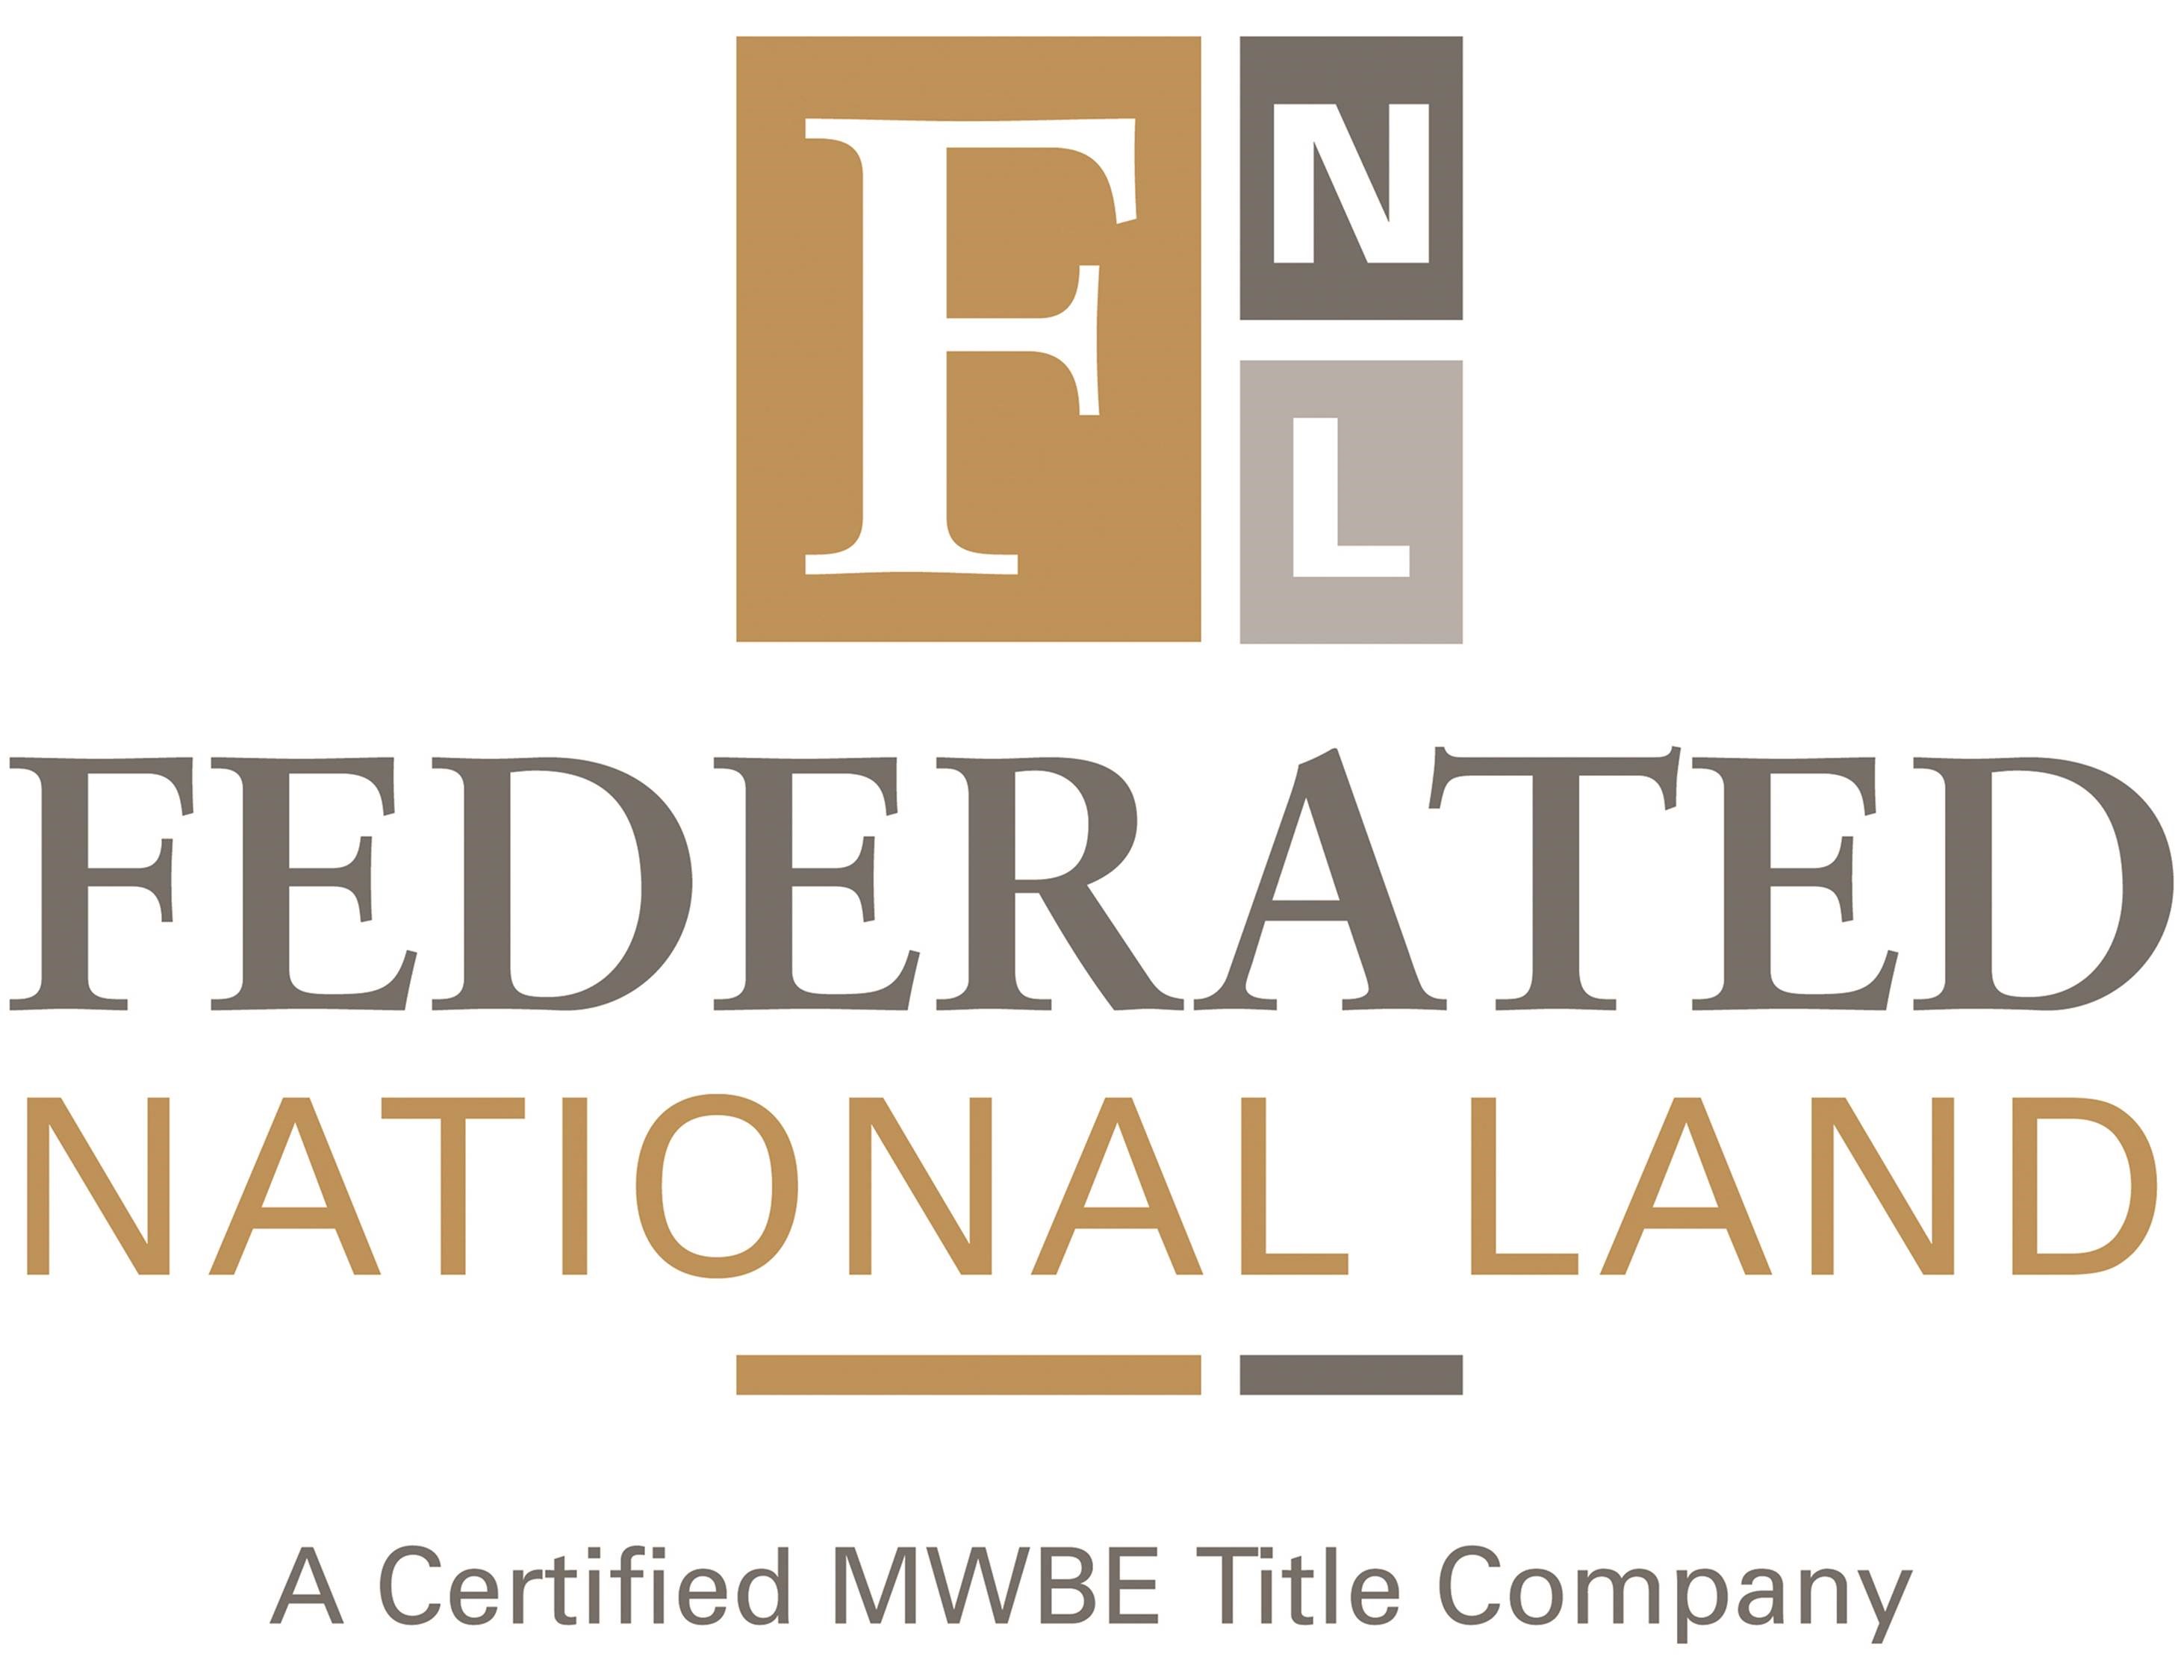 Federated National Land, LLC